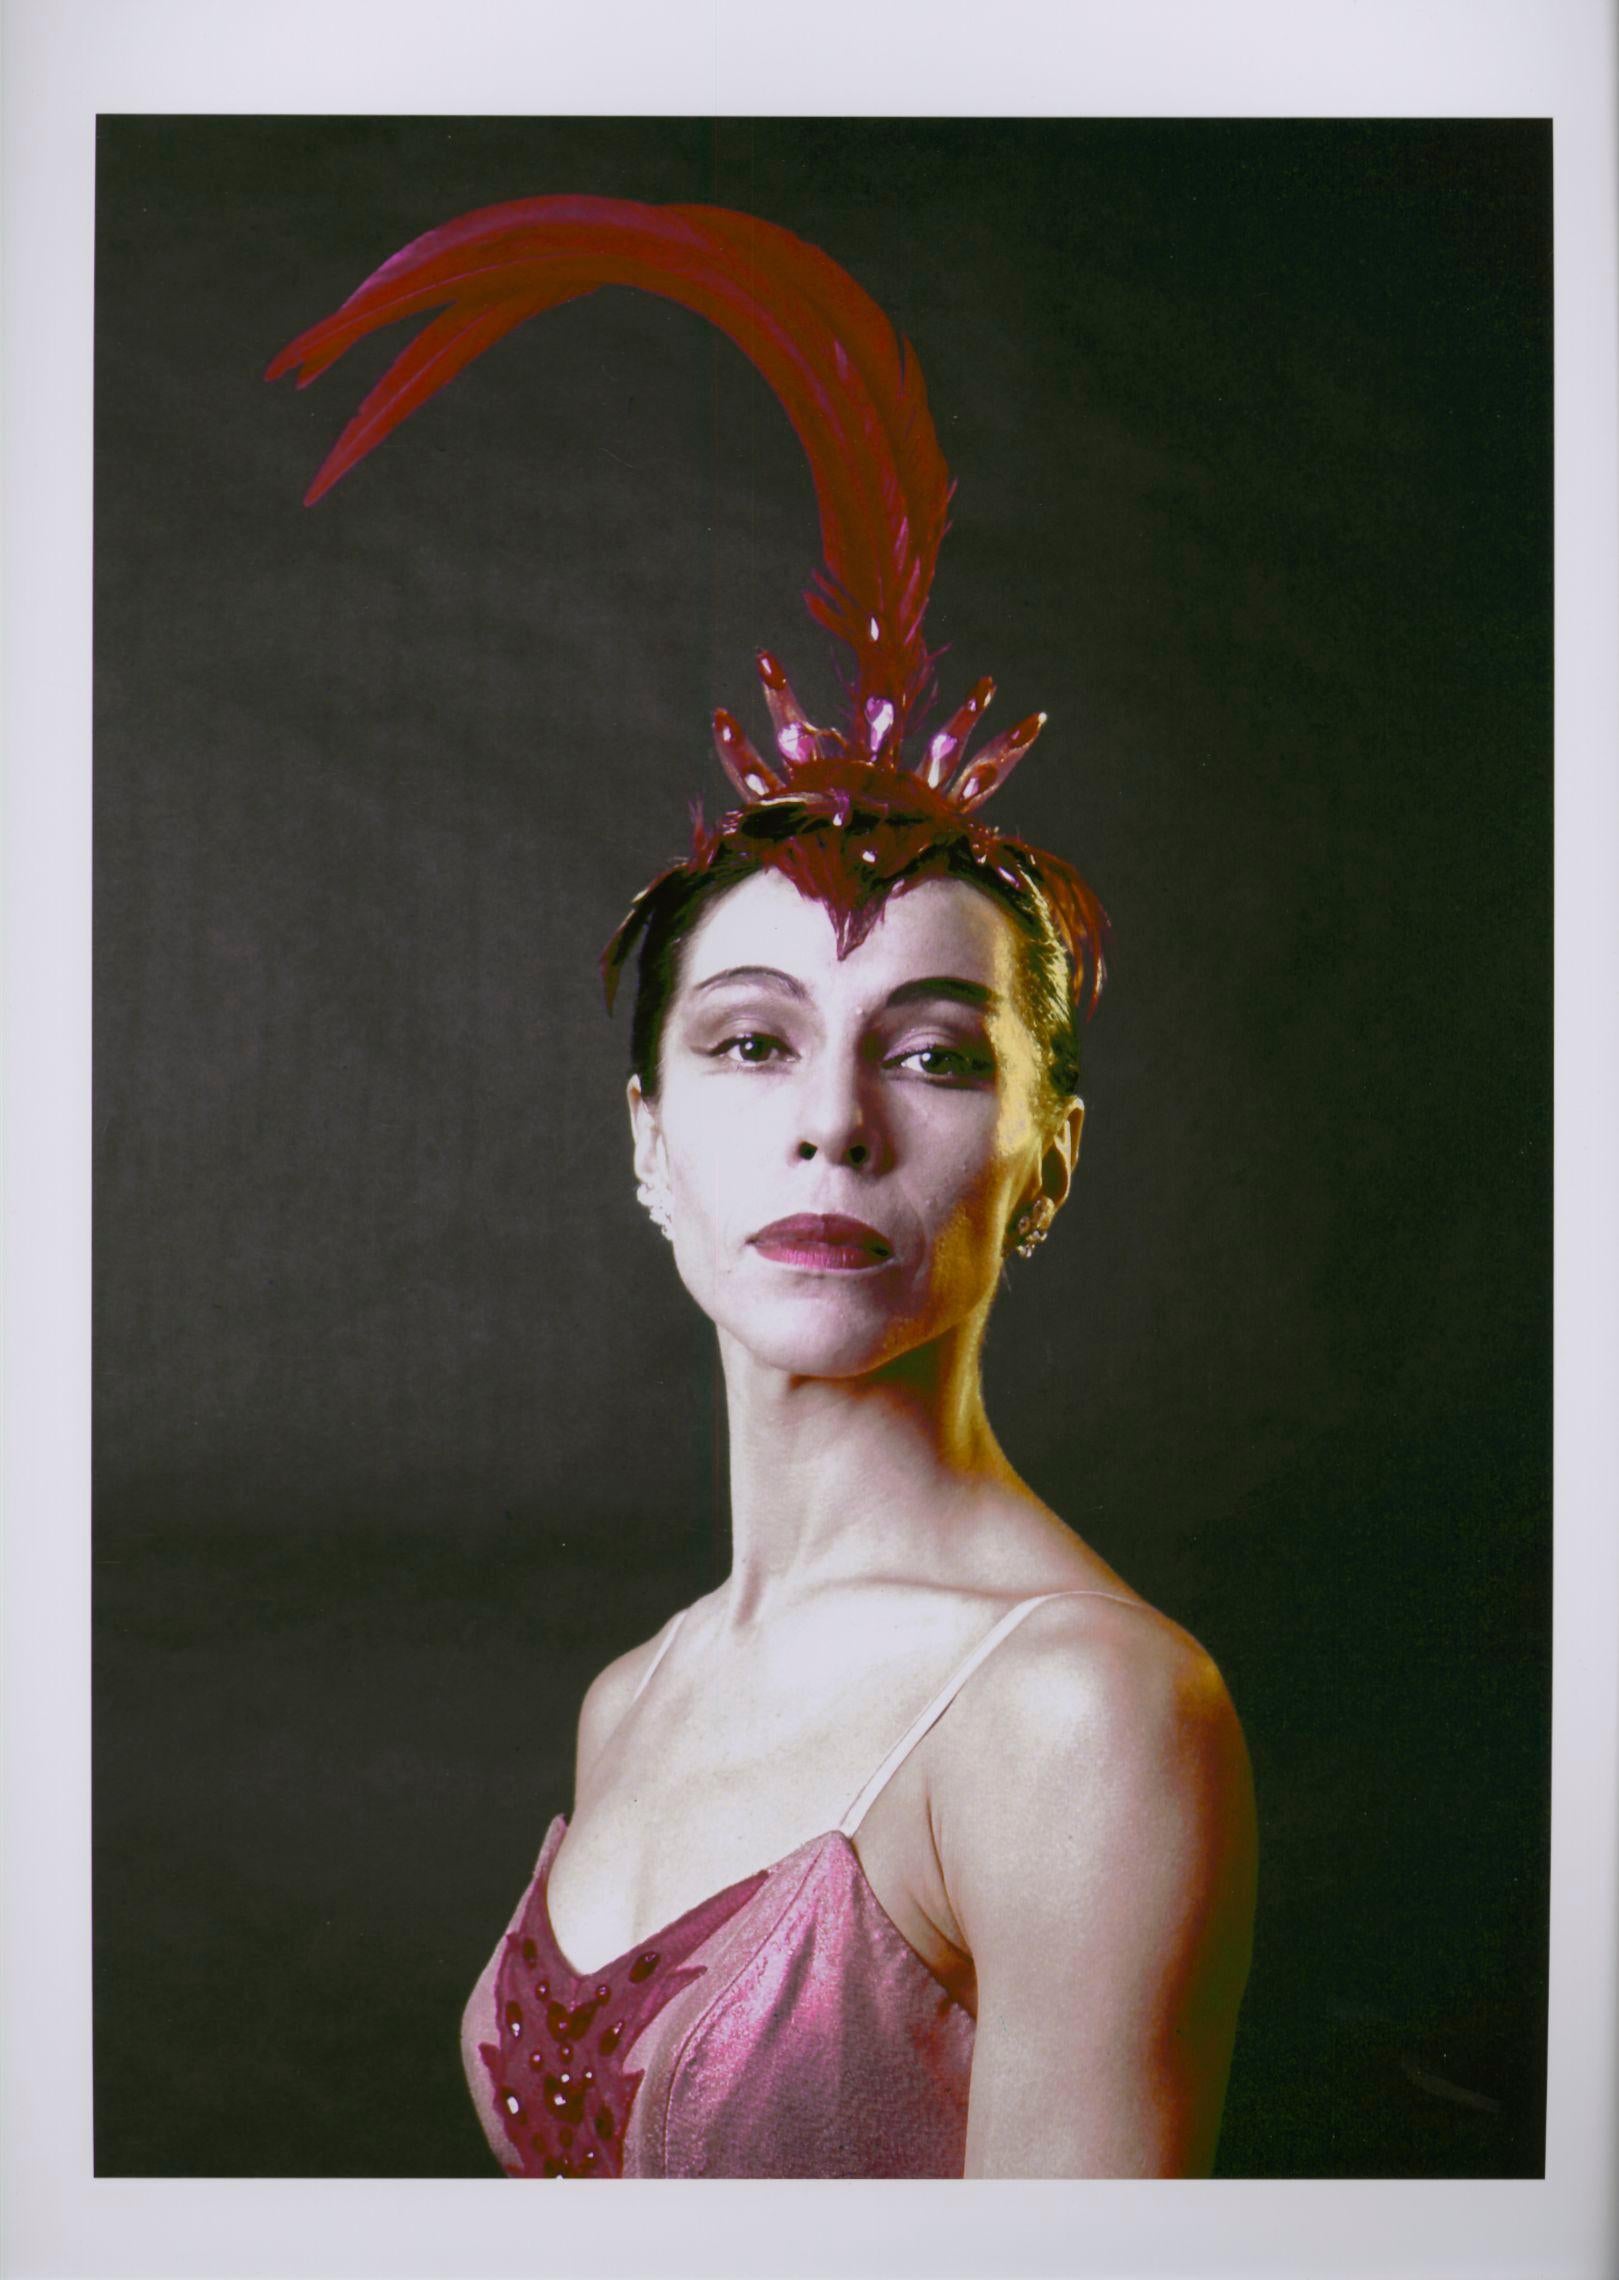 Jack Mitchell Color Photograph - Native American Ballerina Maria Tallchief in "The Firebird"